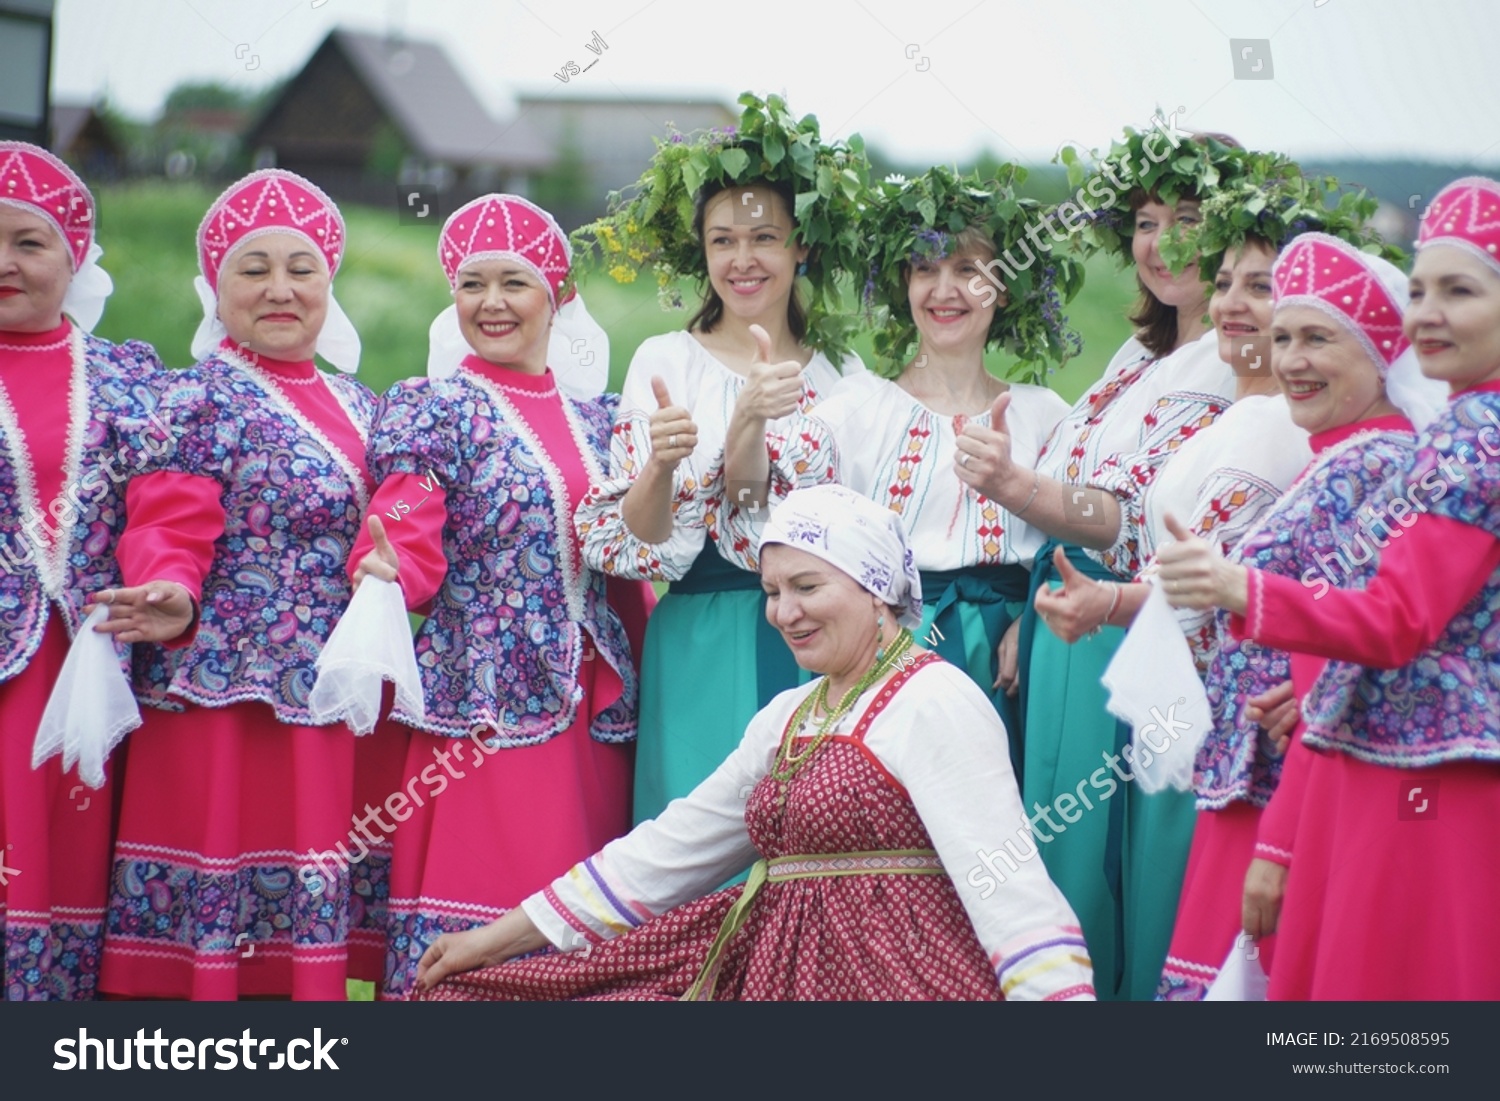 170 Sverdlovsk ukraine Images, Stock Photos & Vectors | Shutterstock